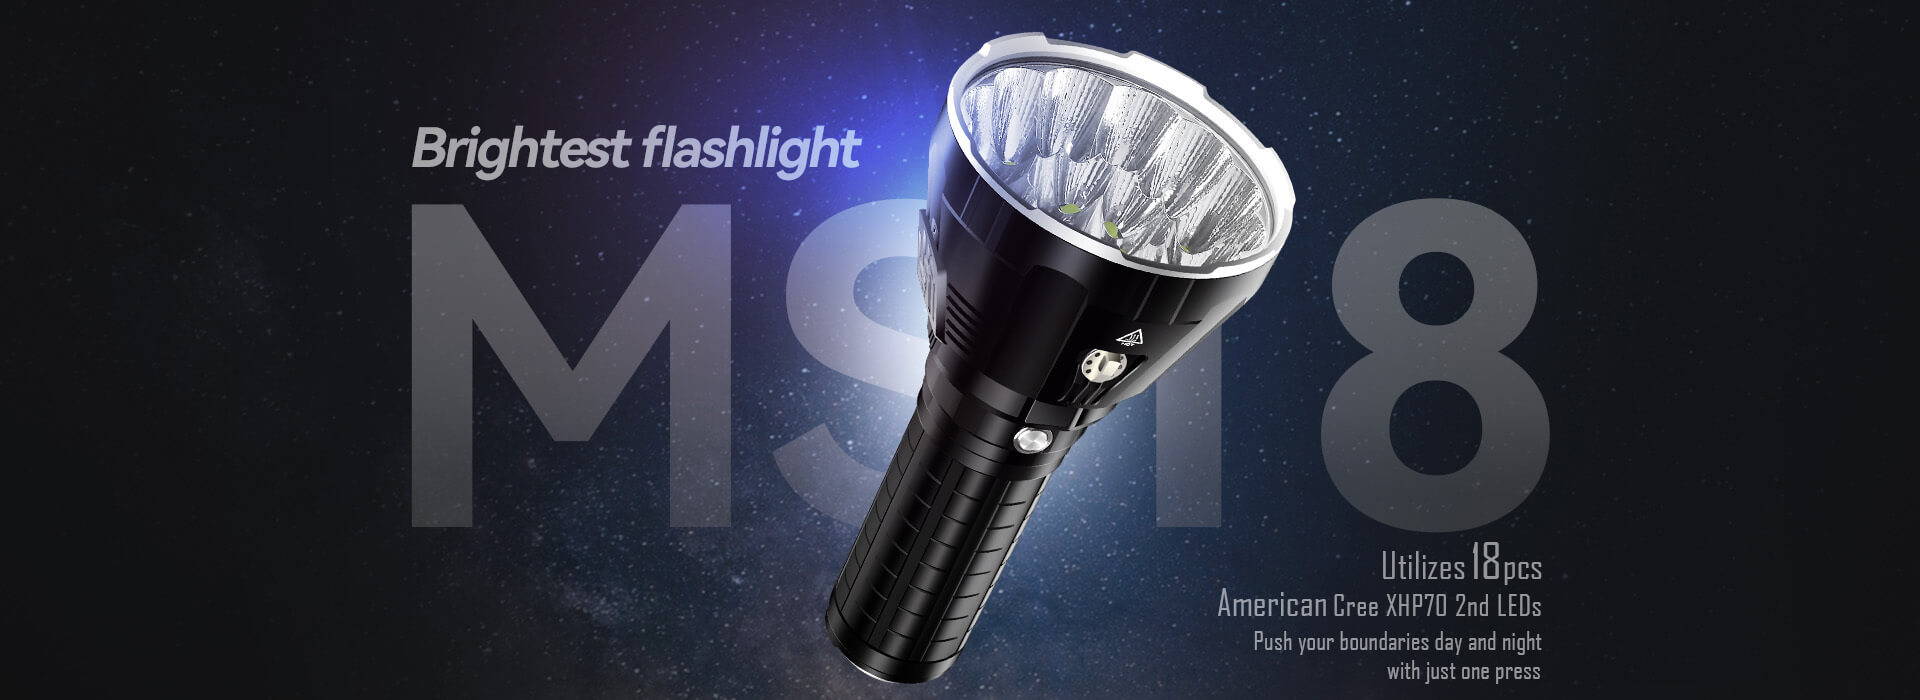 IMALENT MS18 Brightest Flashlight